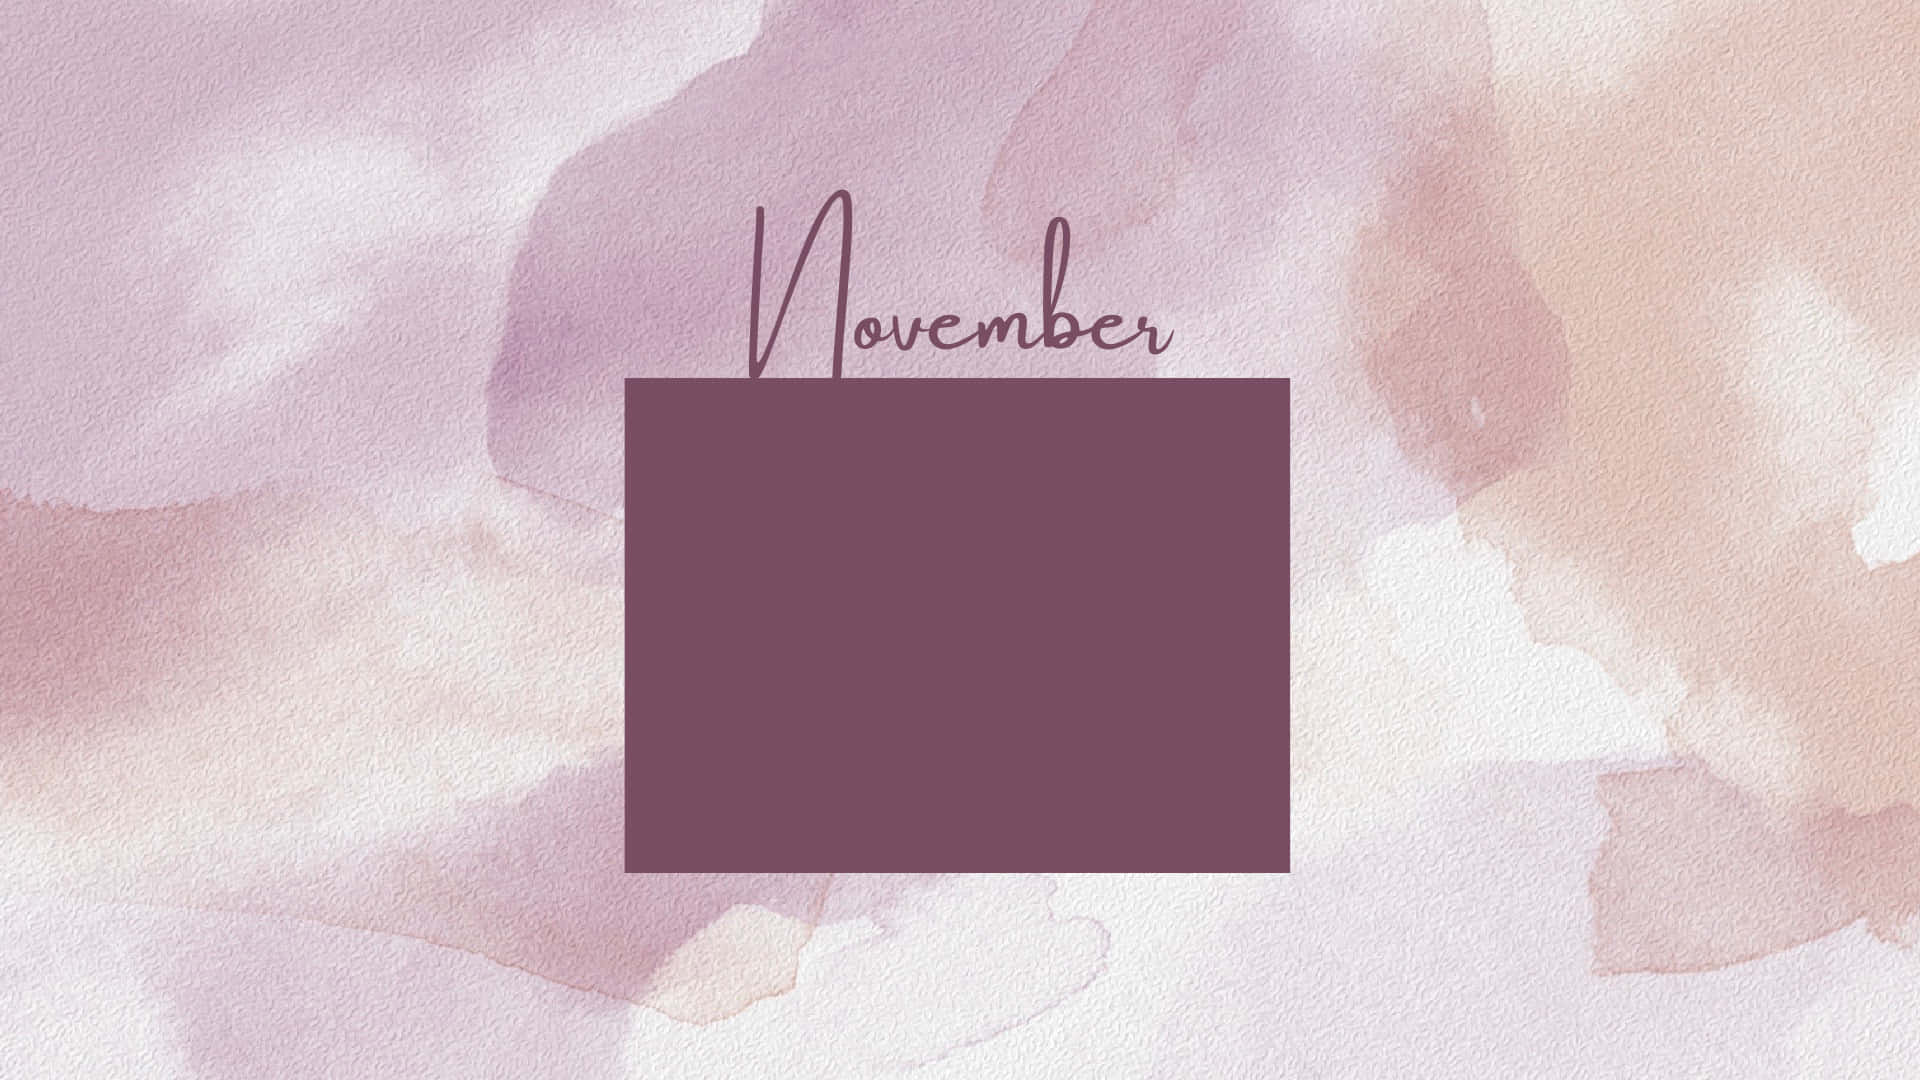 Enjoy the beauty of November Wallpaper